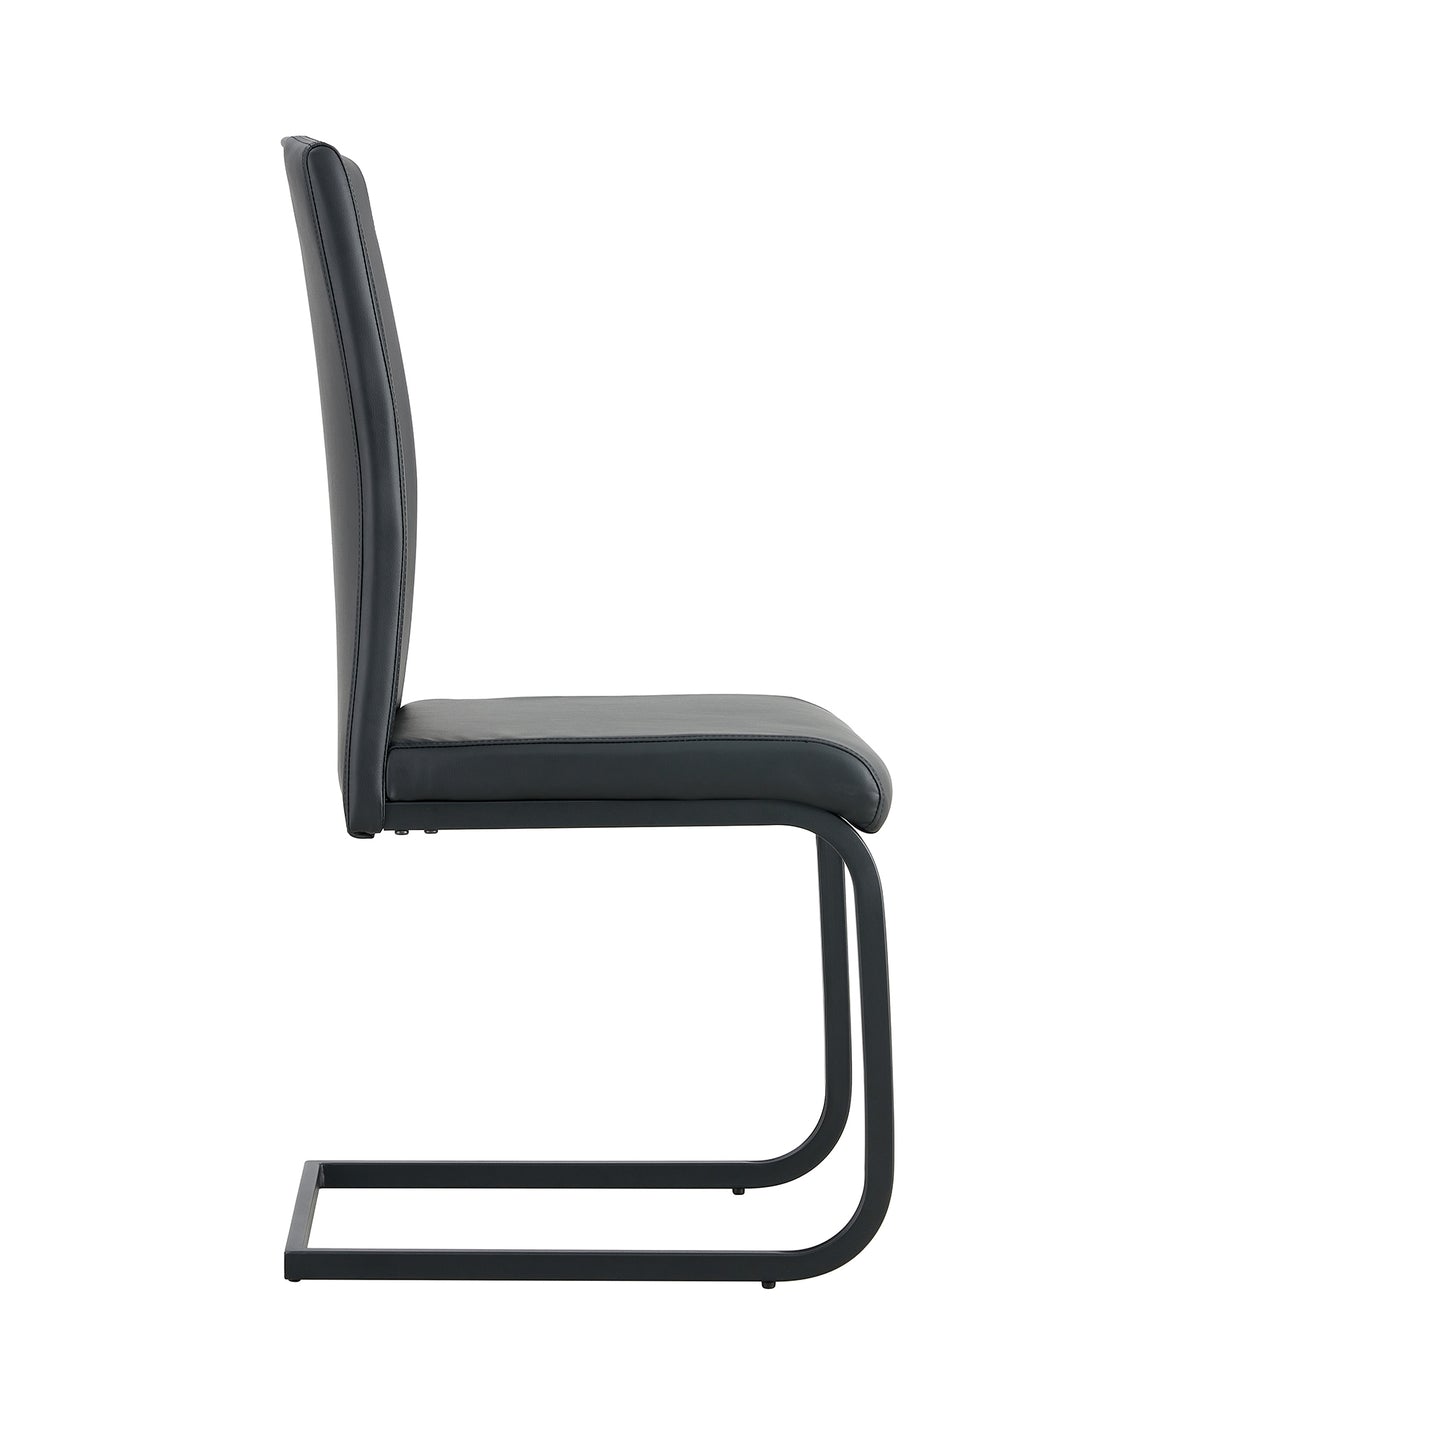 DineHaus Black Chair Set